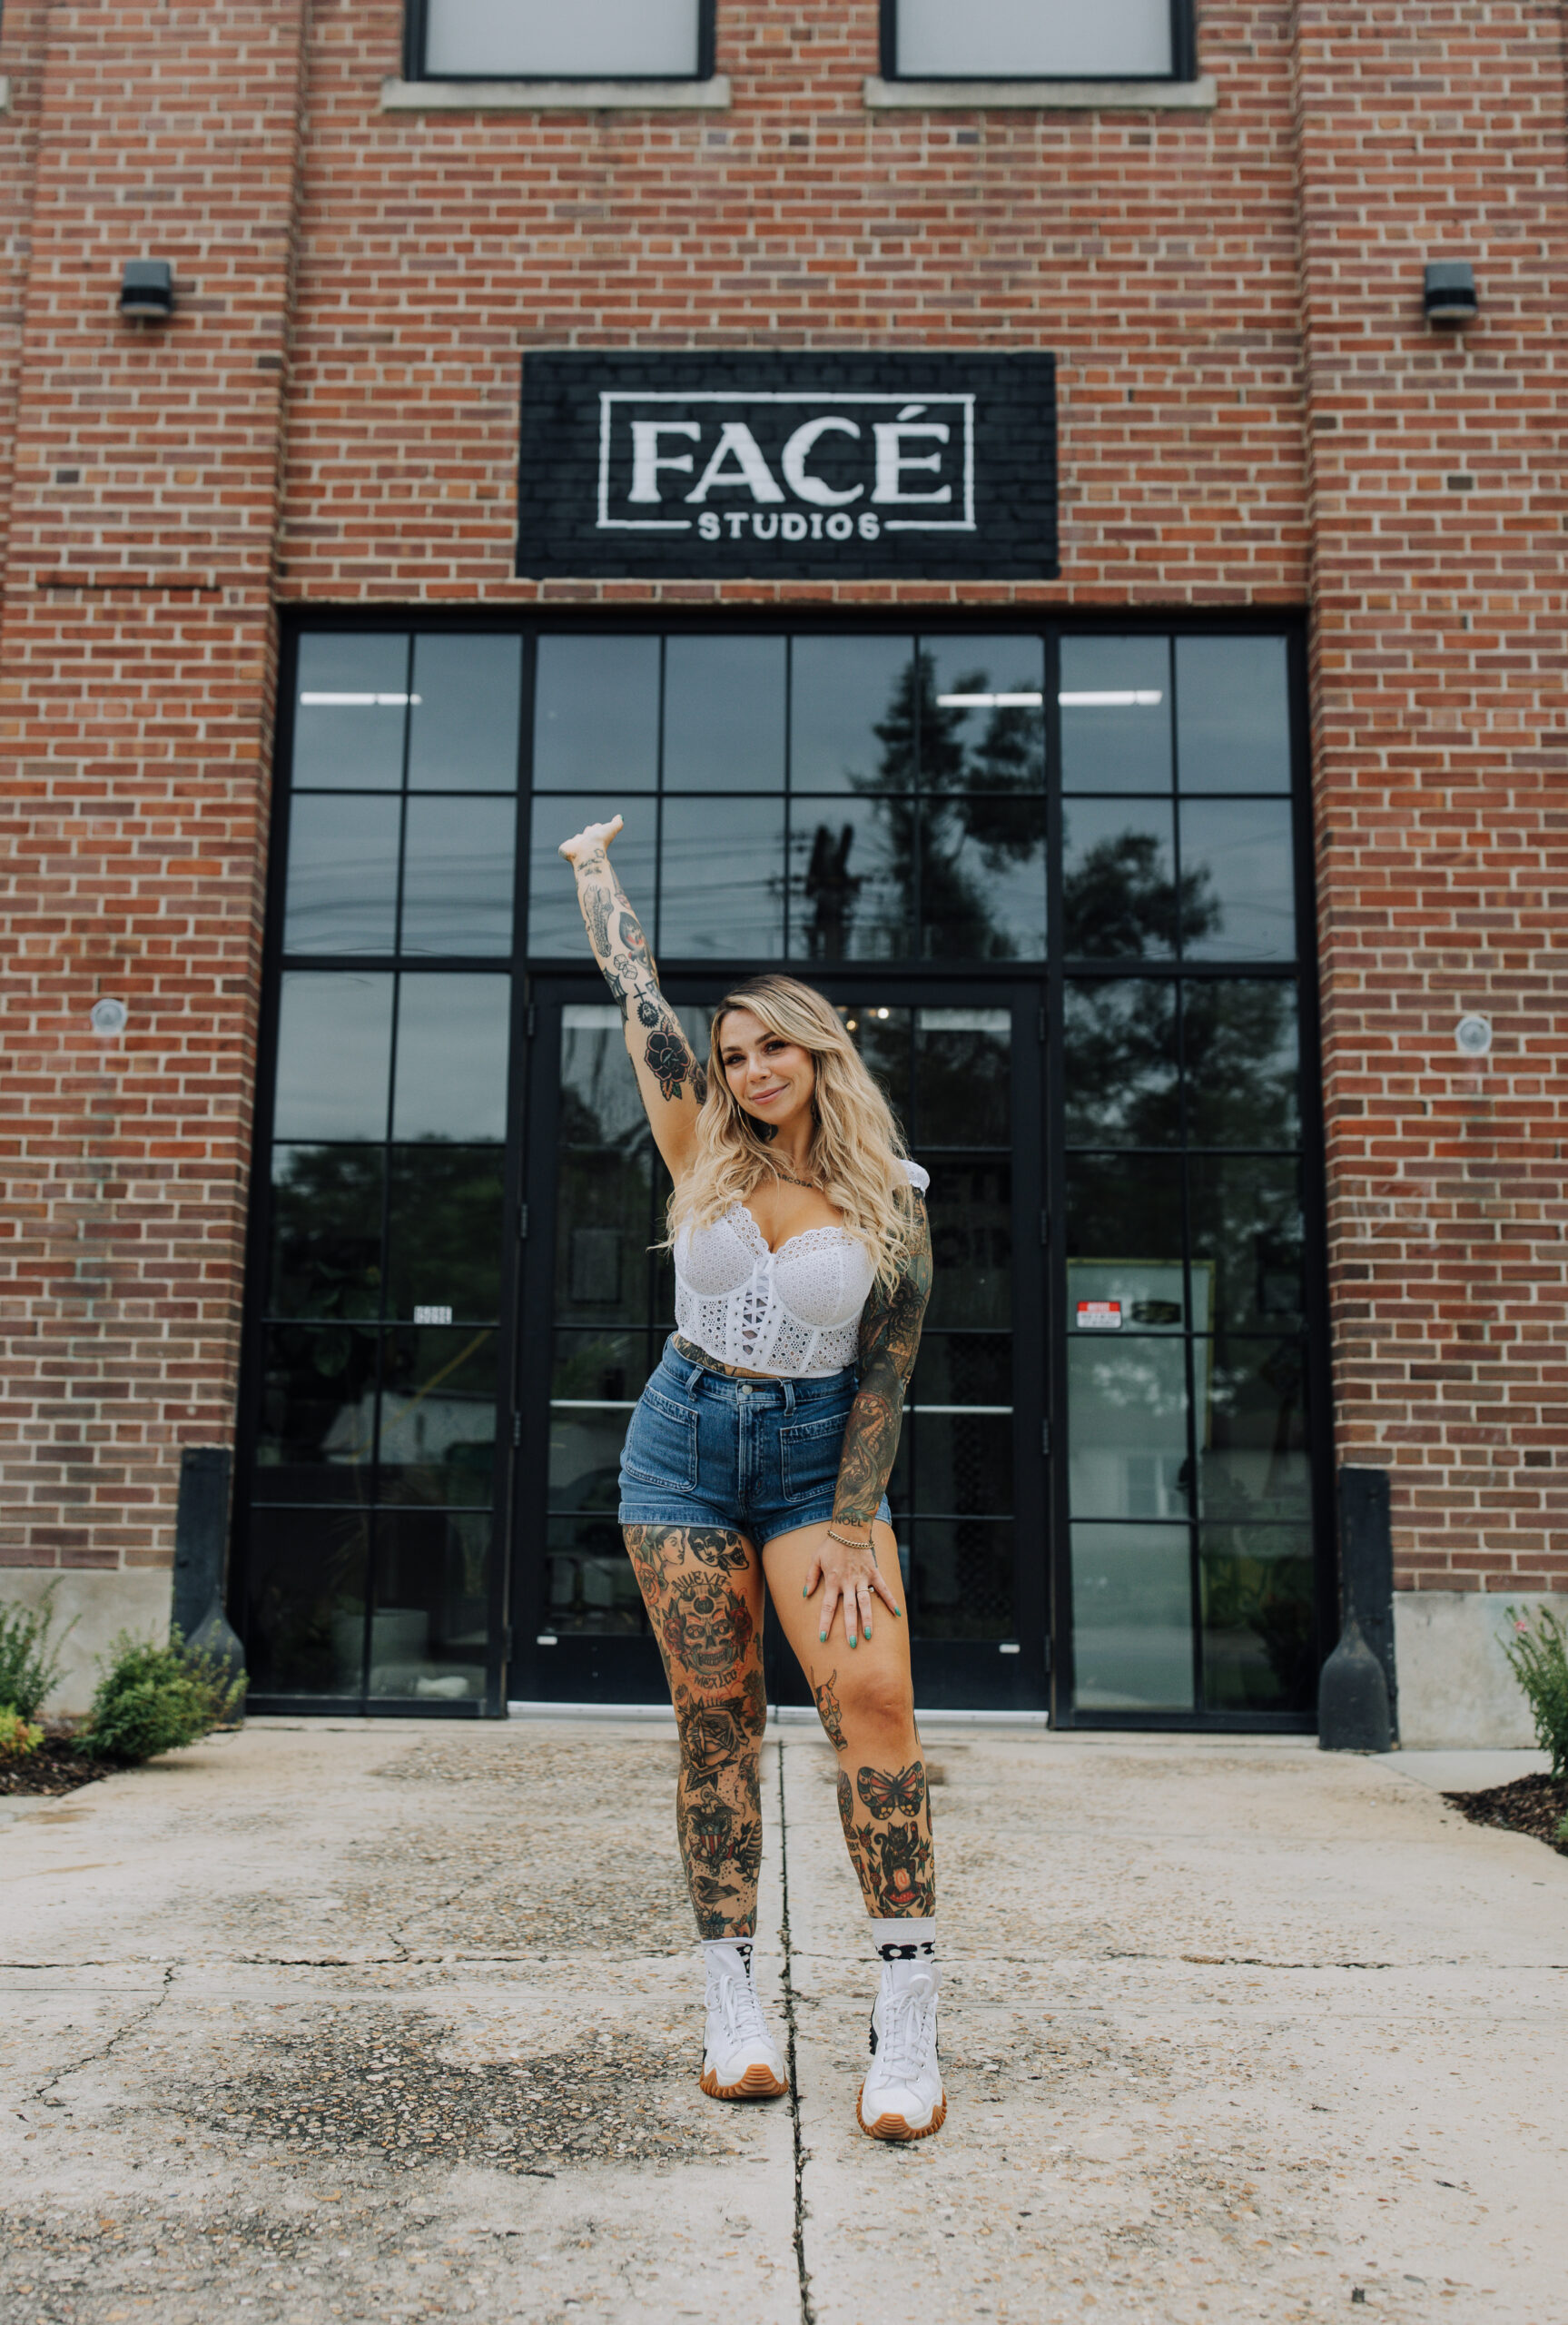 Danielle at Face Academy